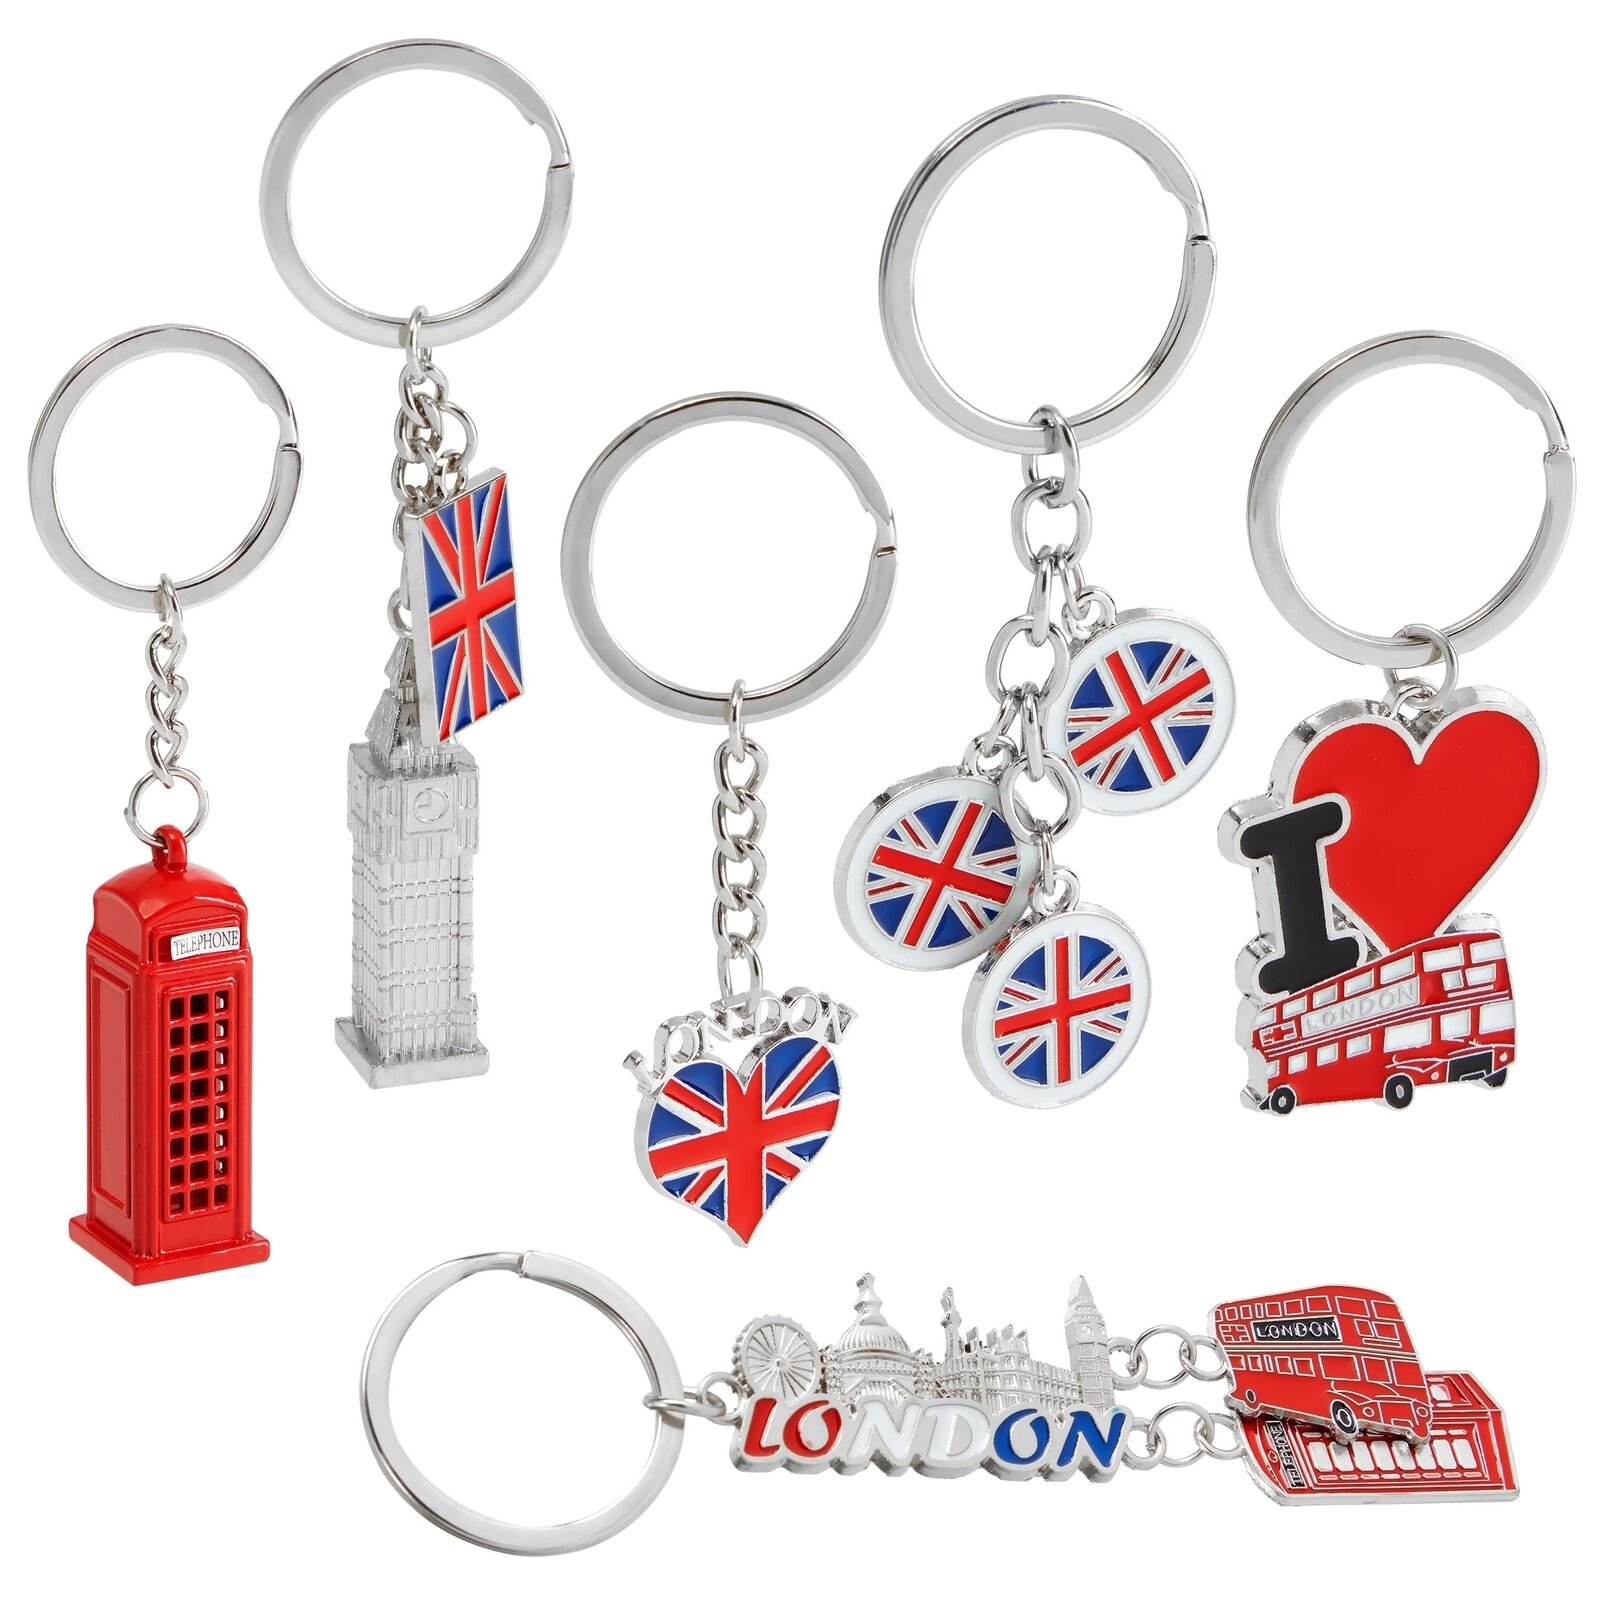 6 Pcs England UK London Keychains, British Souvenir Gift, Metal Key Rings